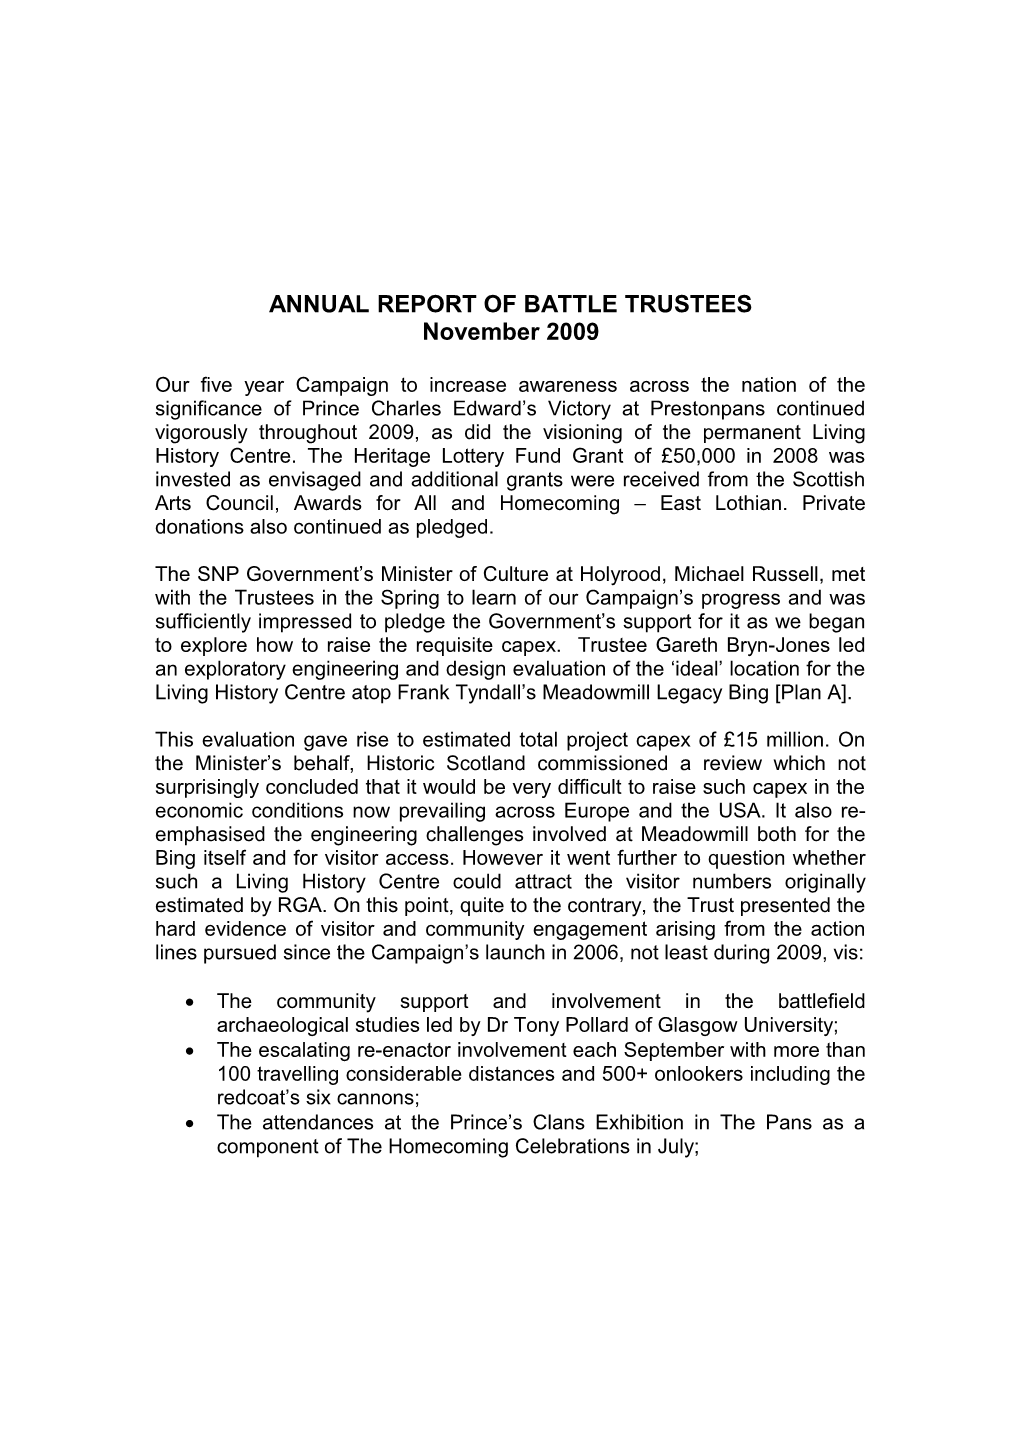 Annual Report of Battle Trustees